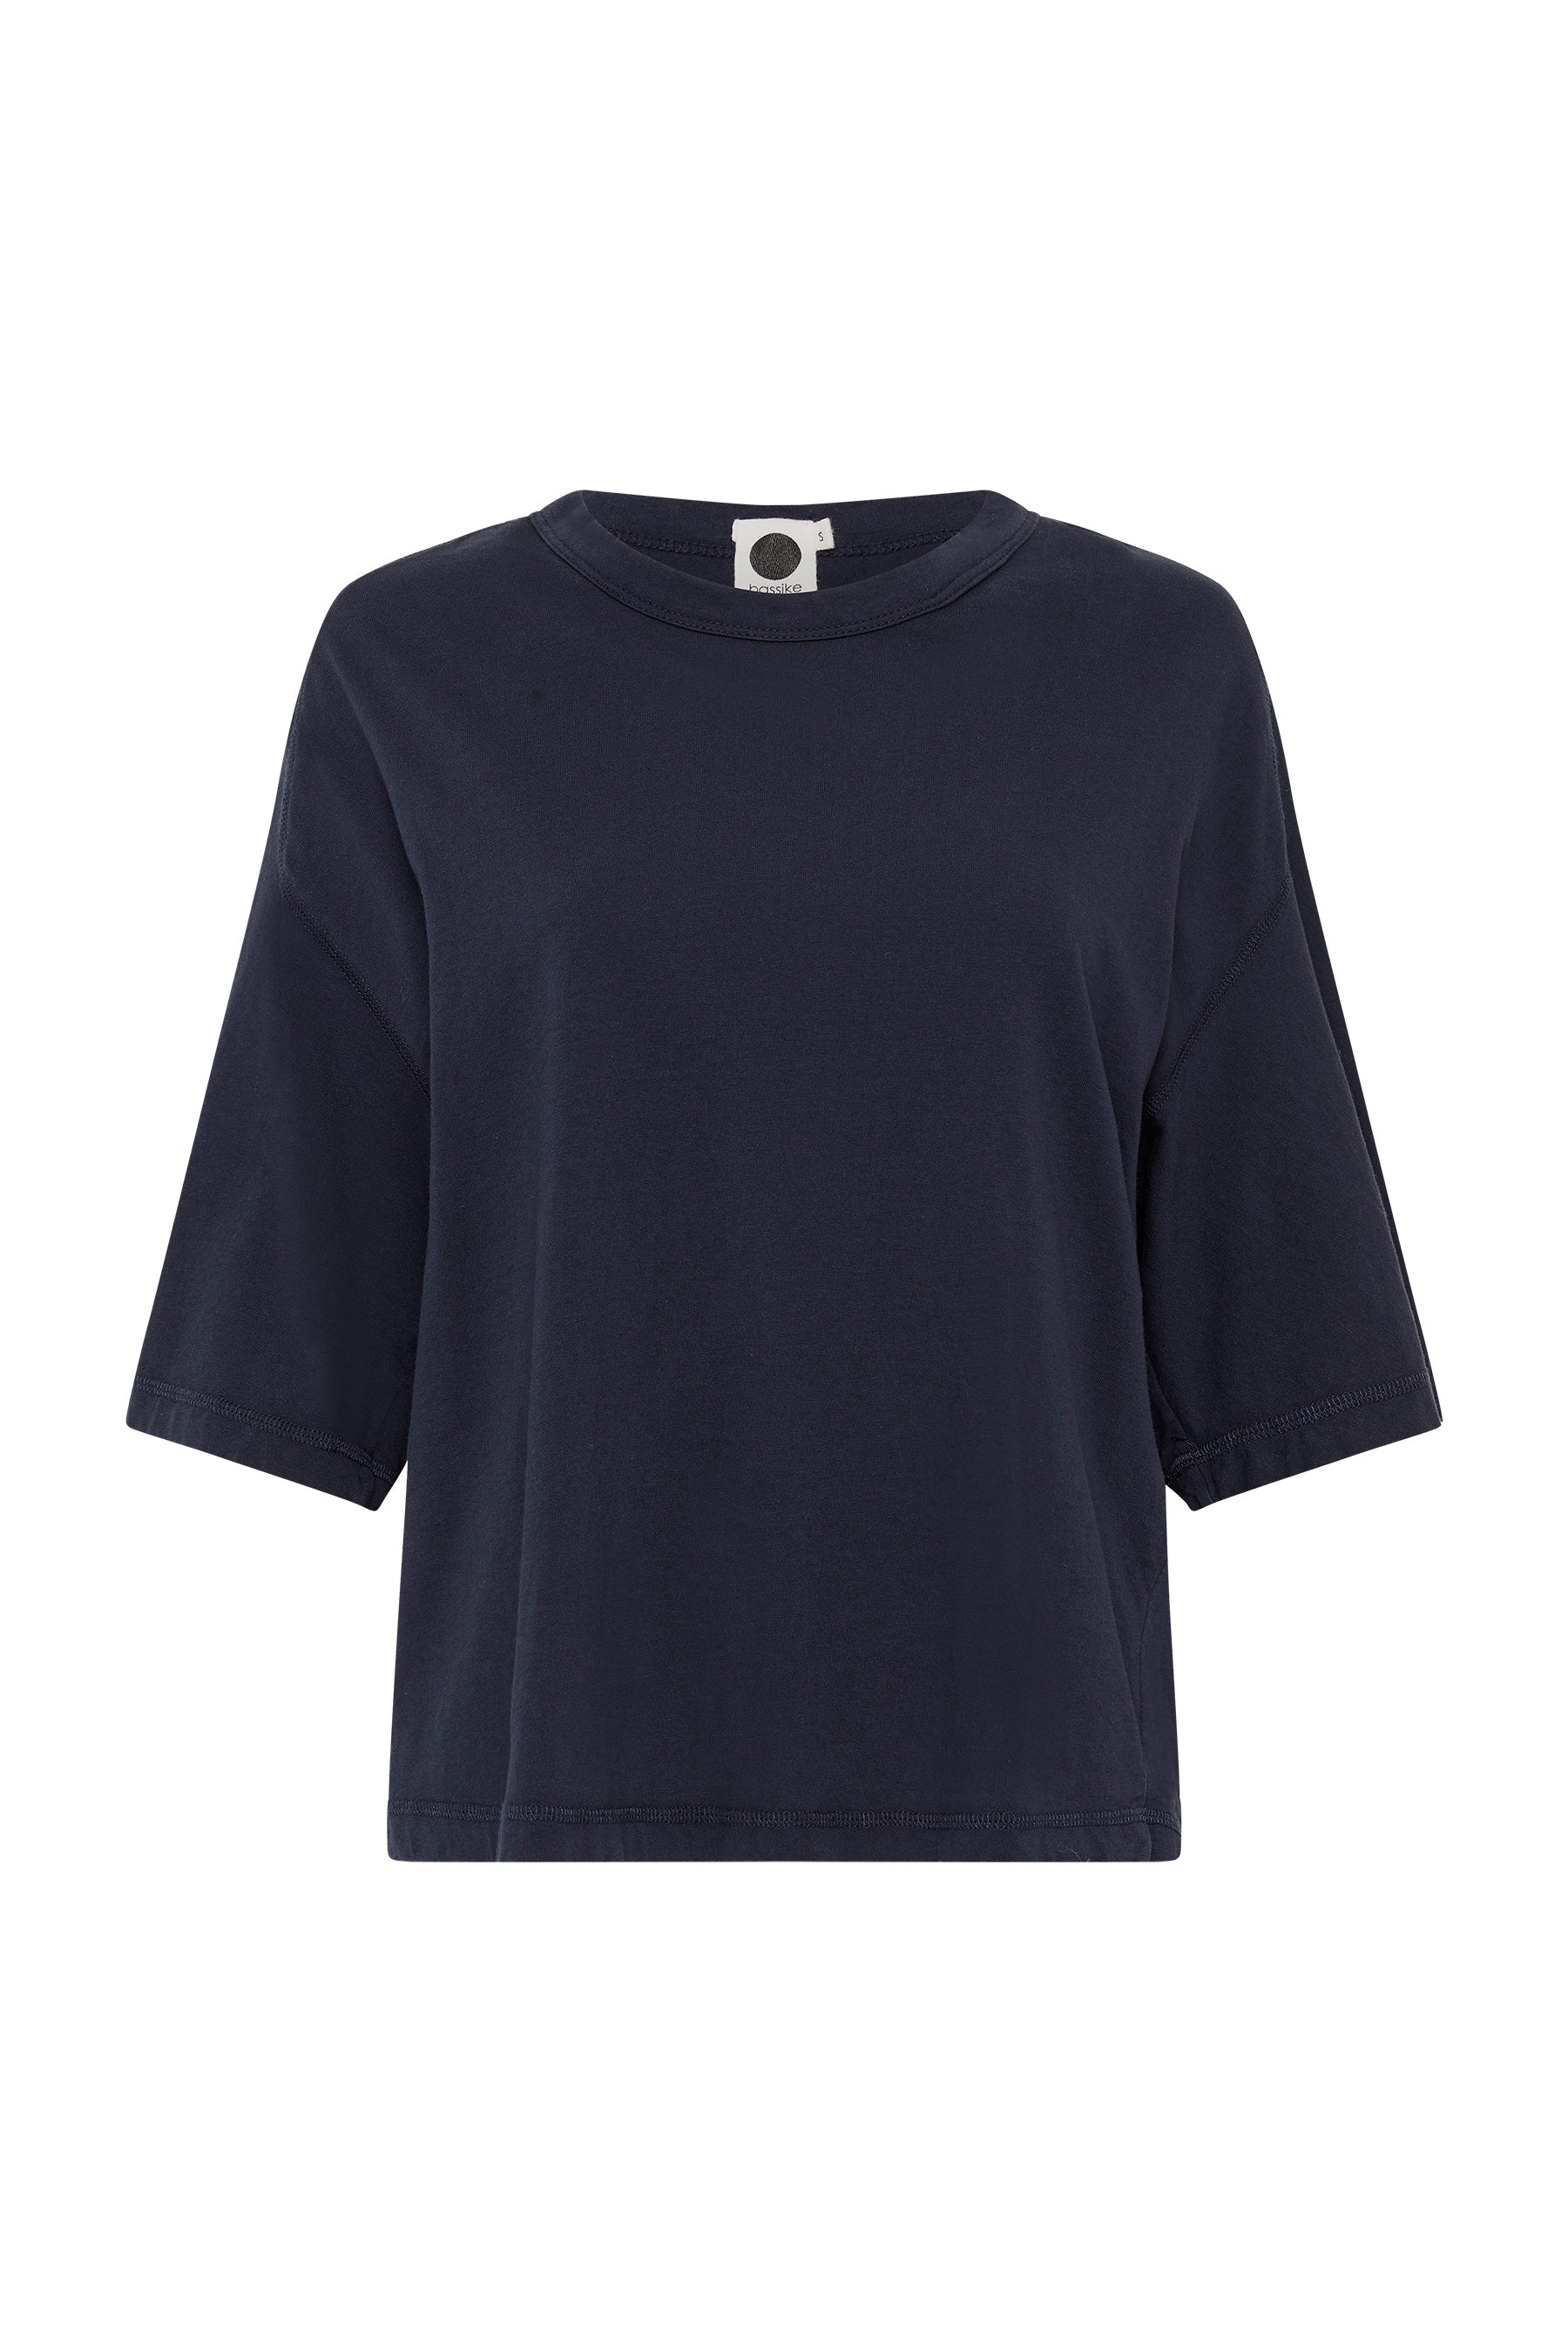 Back Splice Boxy S/S T-Shirt in Blue Ink